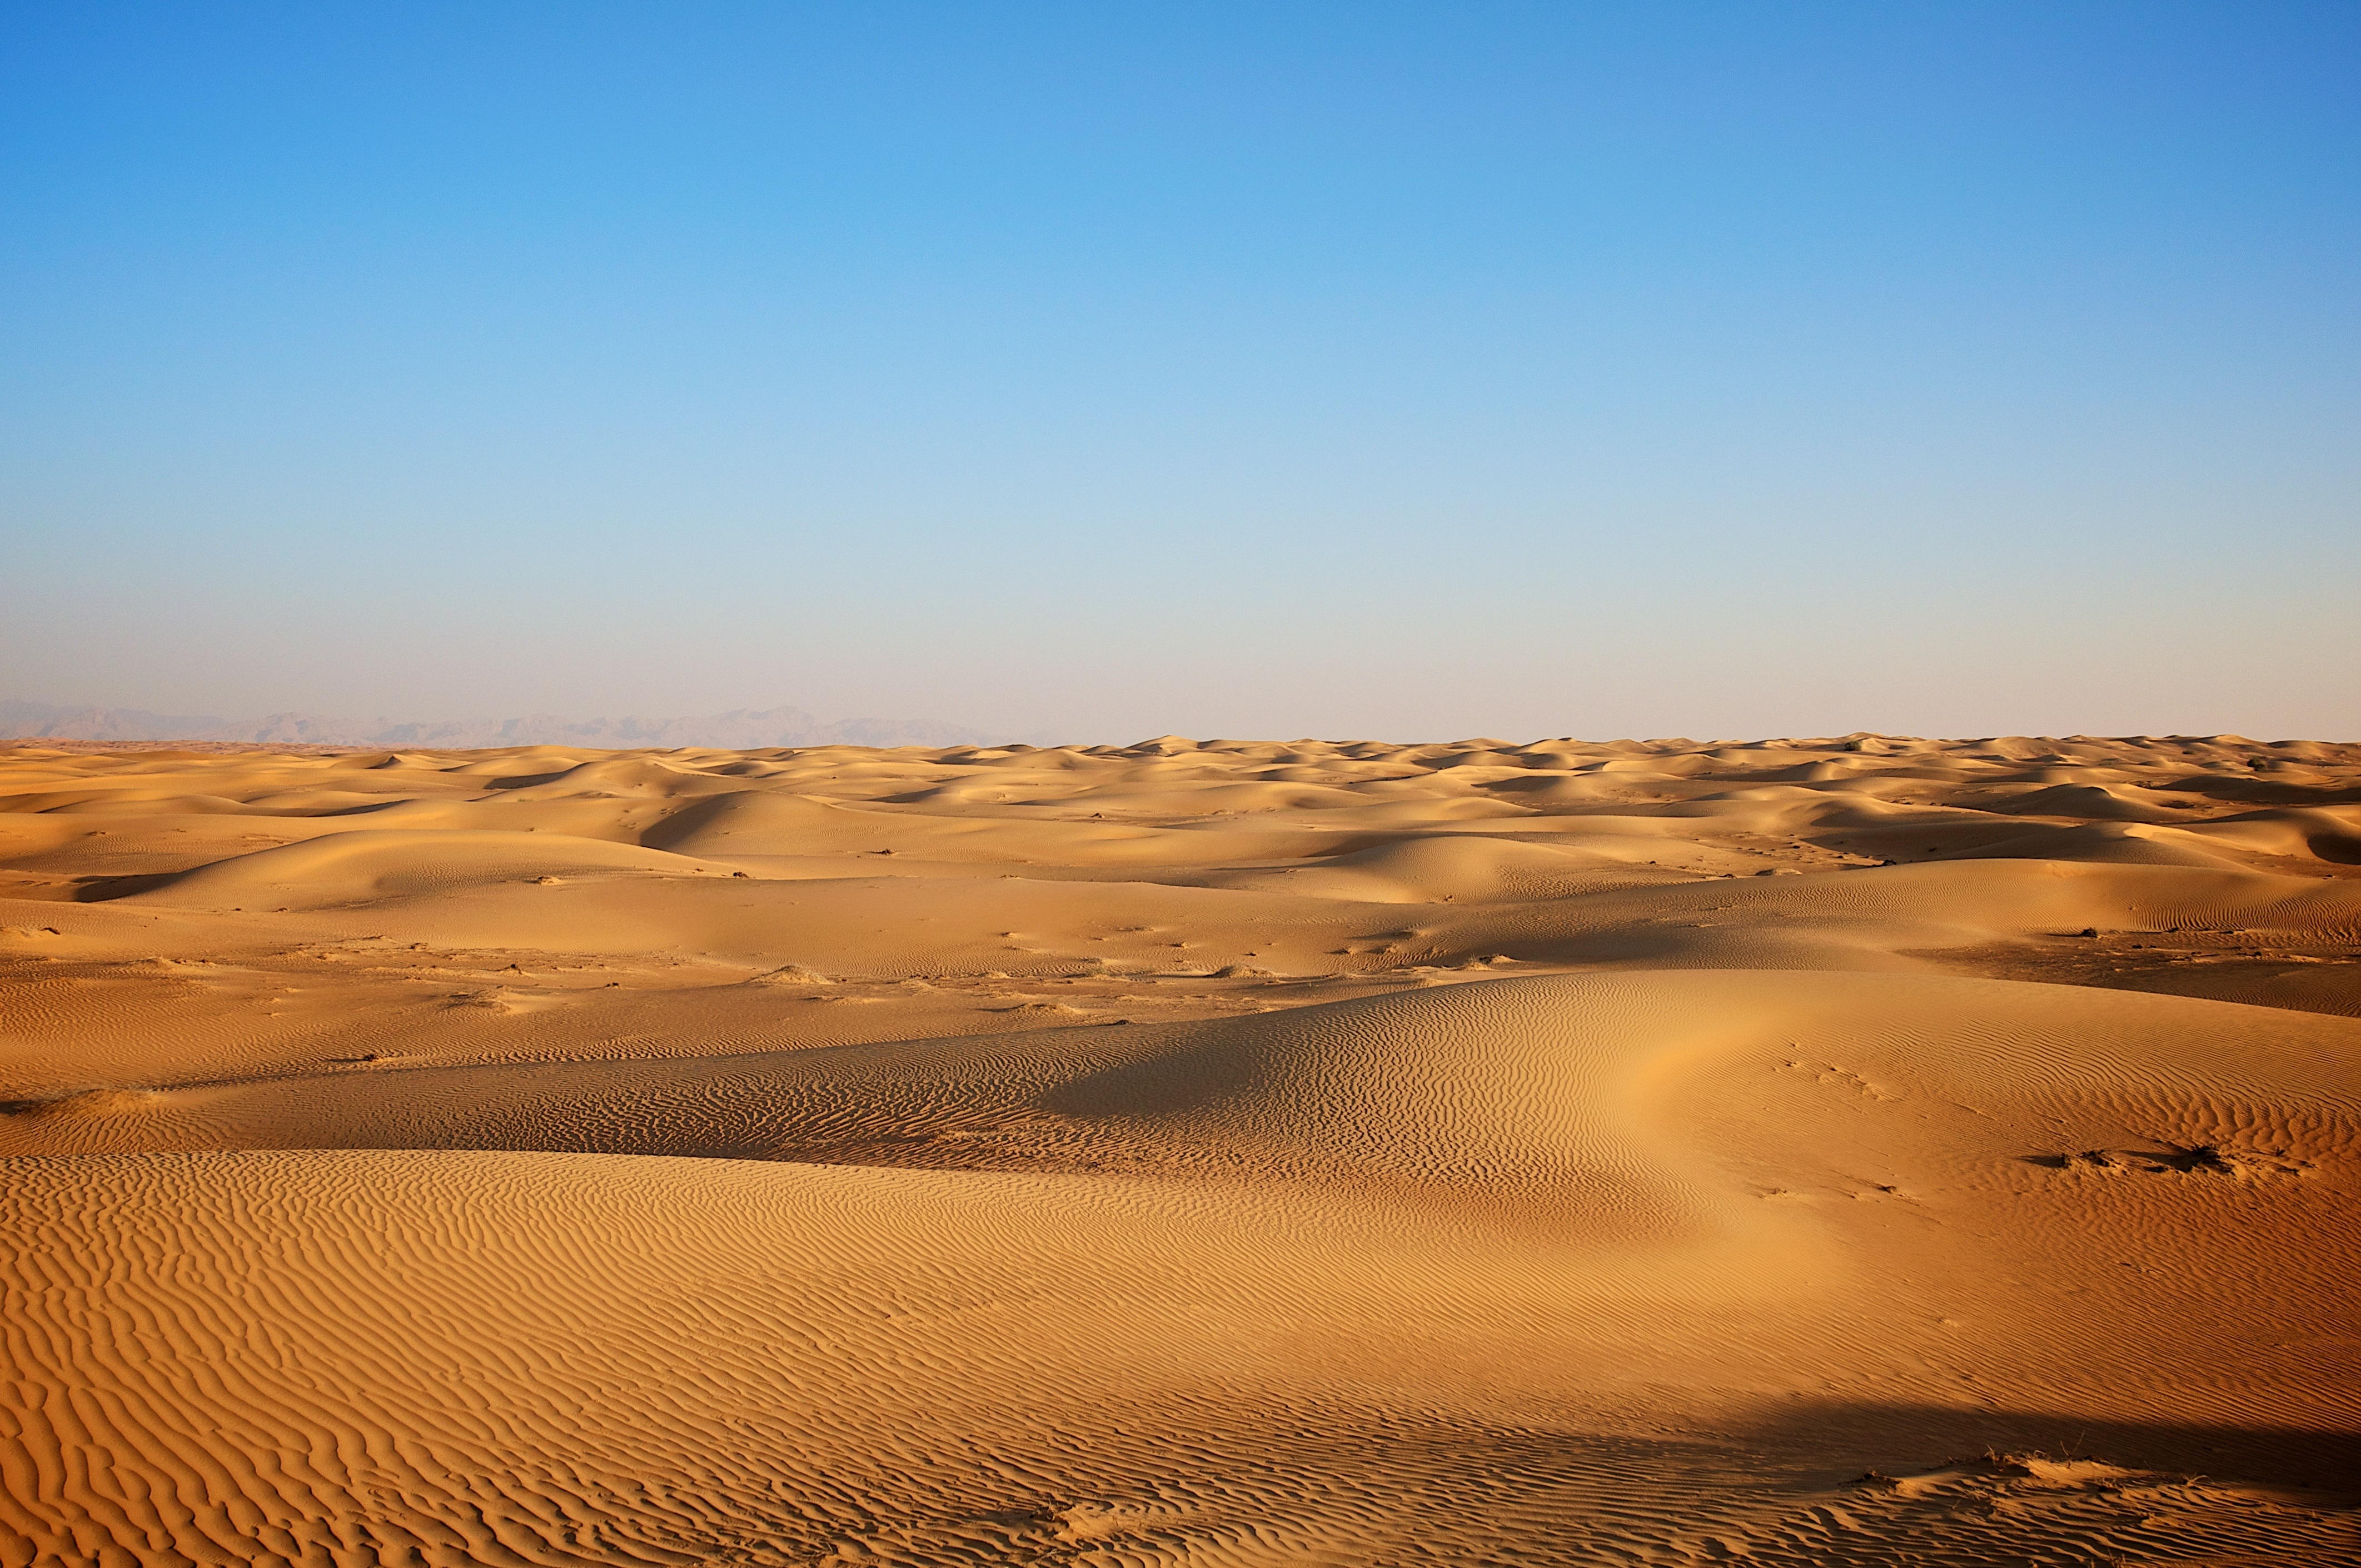 Curvy, Desert, Deserted, Hot, Landscape, HQ Photo